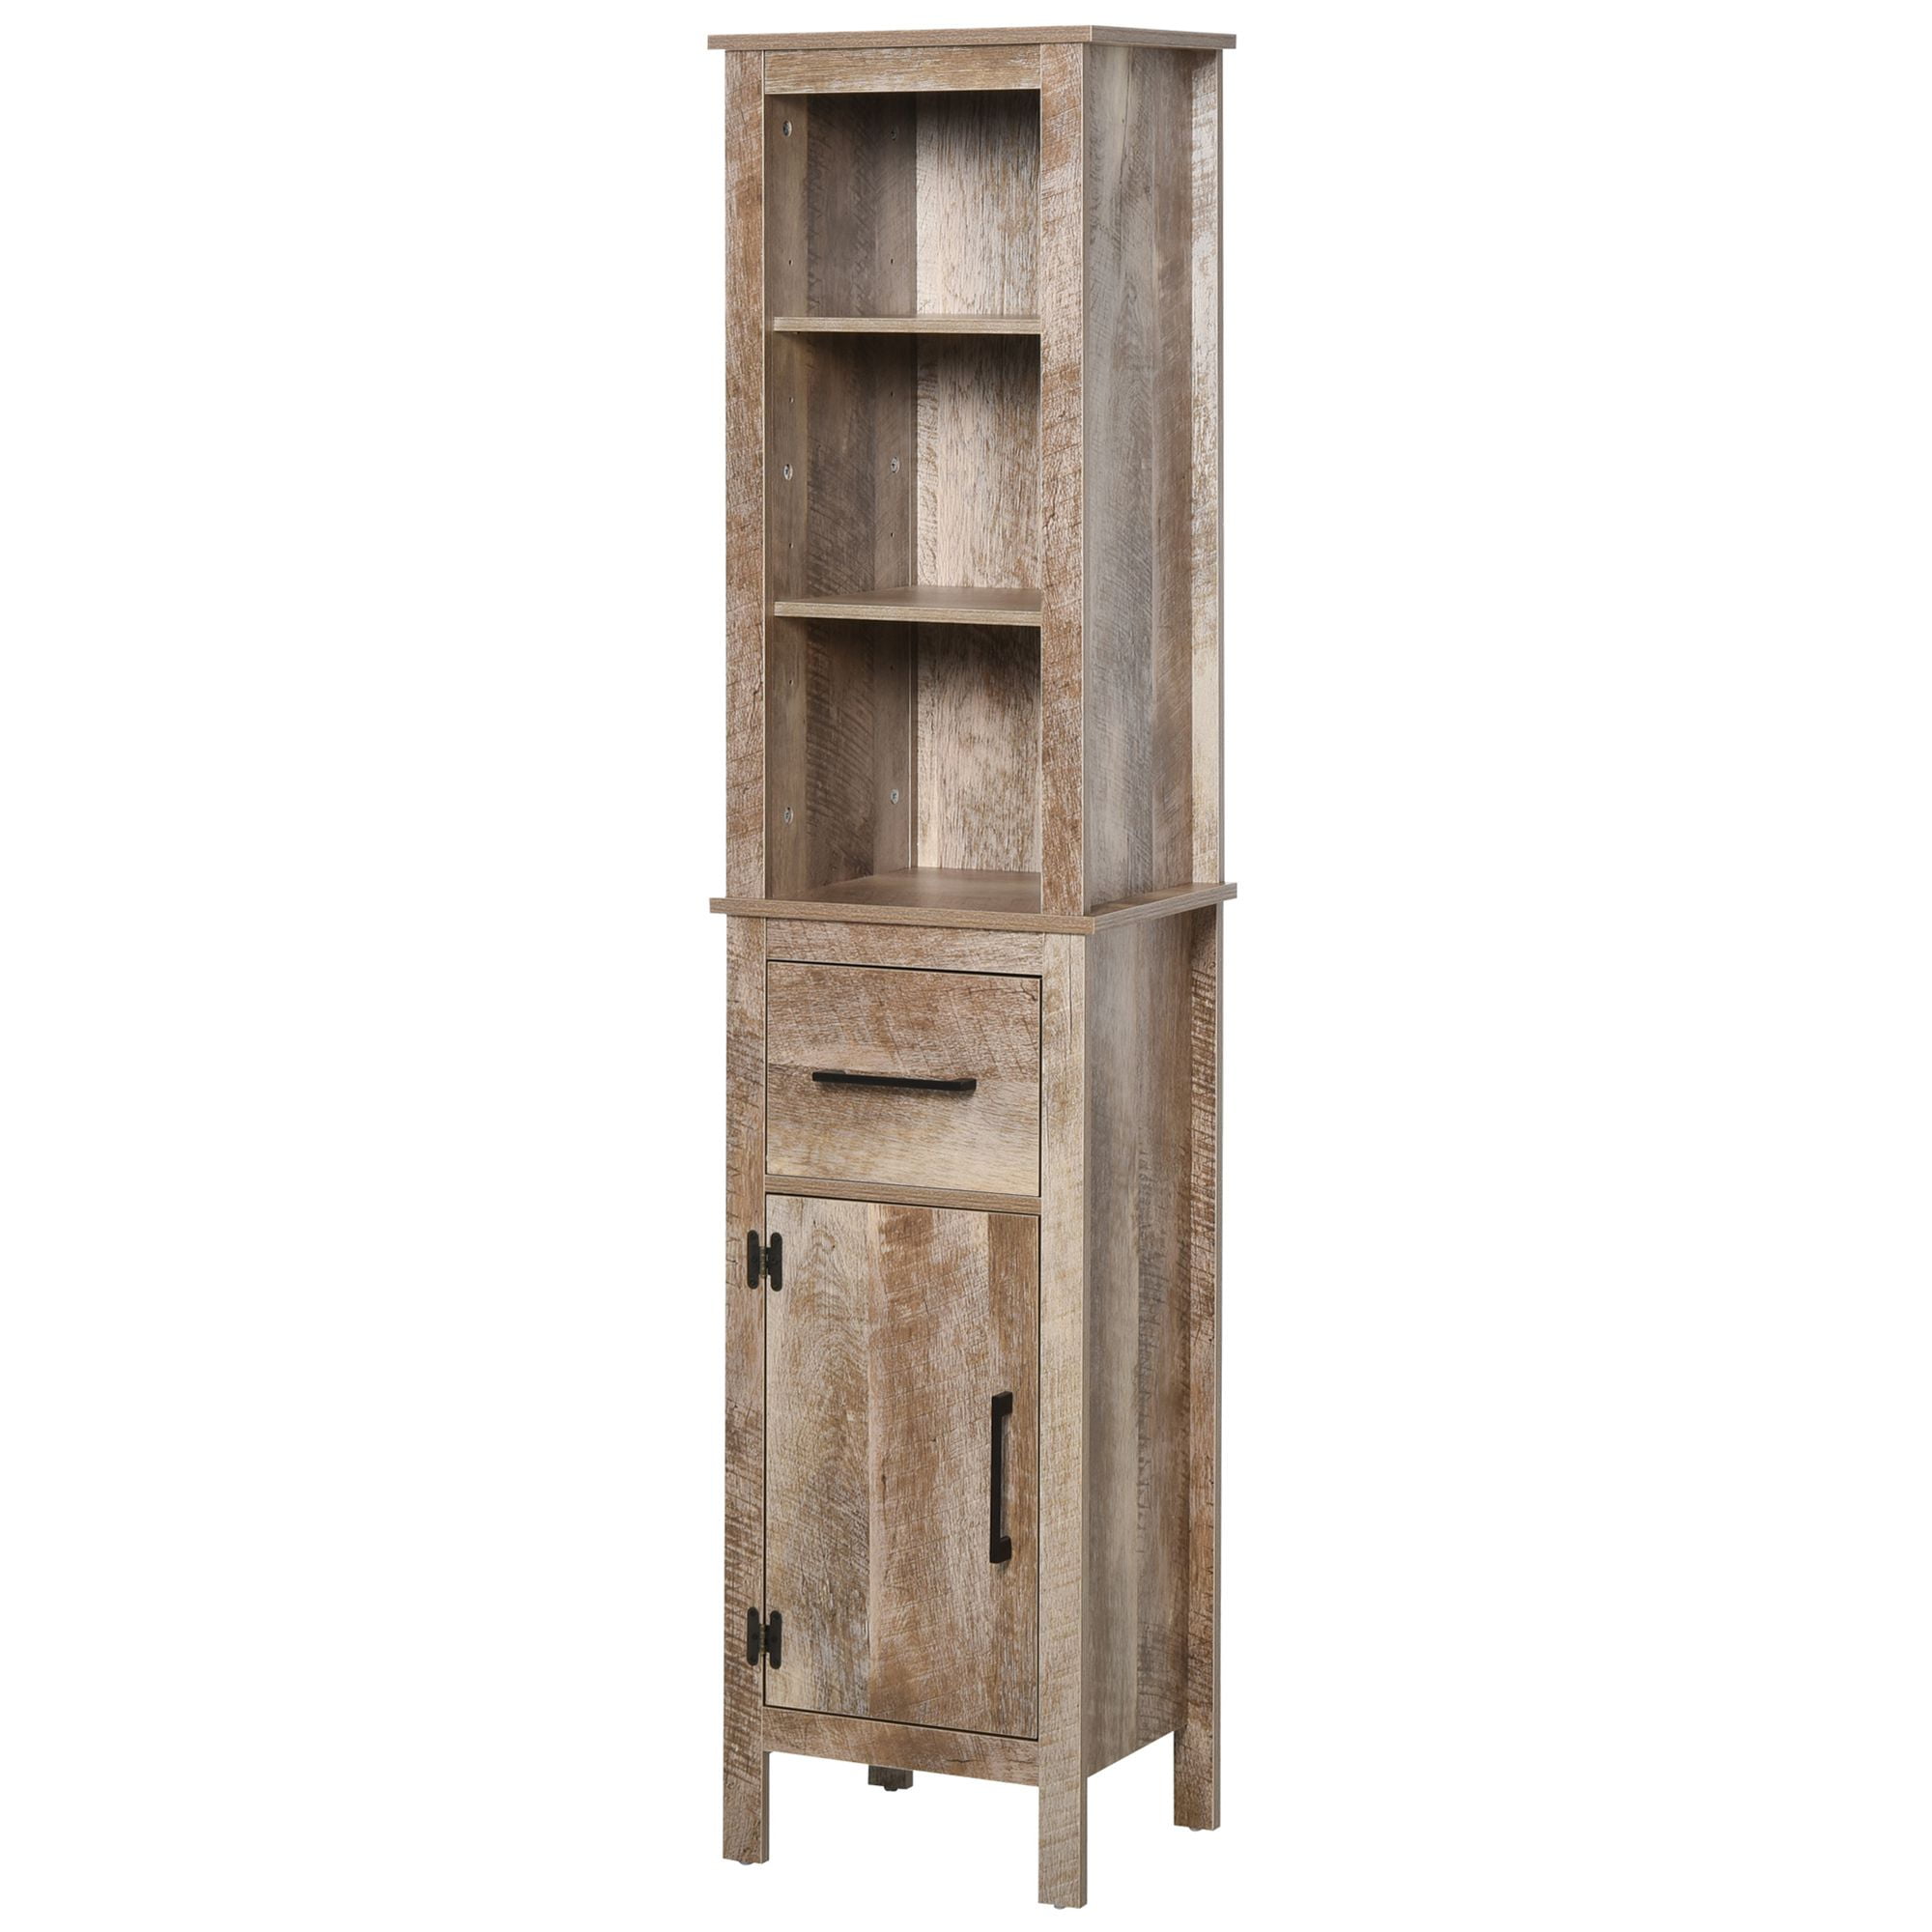 Kleankin Tall Bathroom Storage Cabinet, Tall Thin Storage Shelves